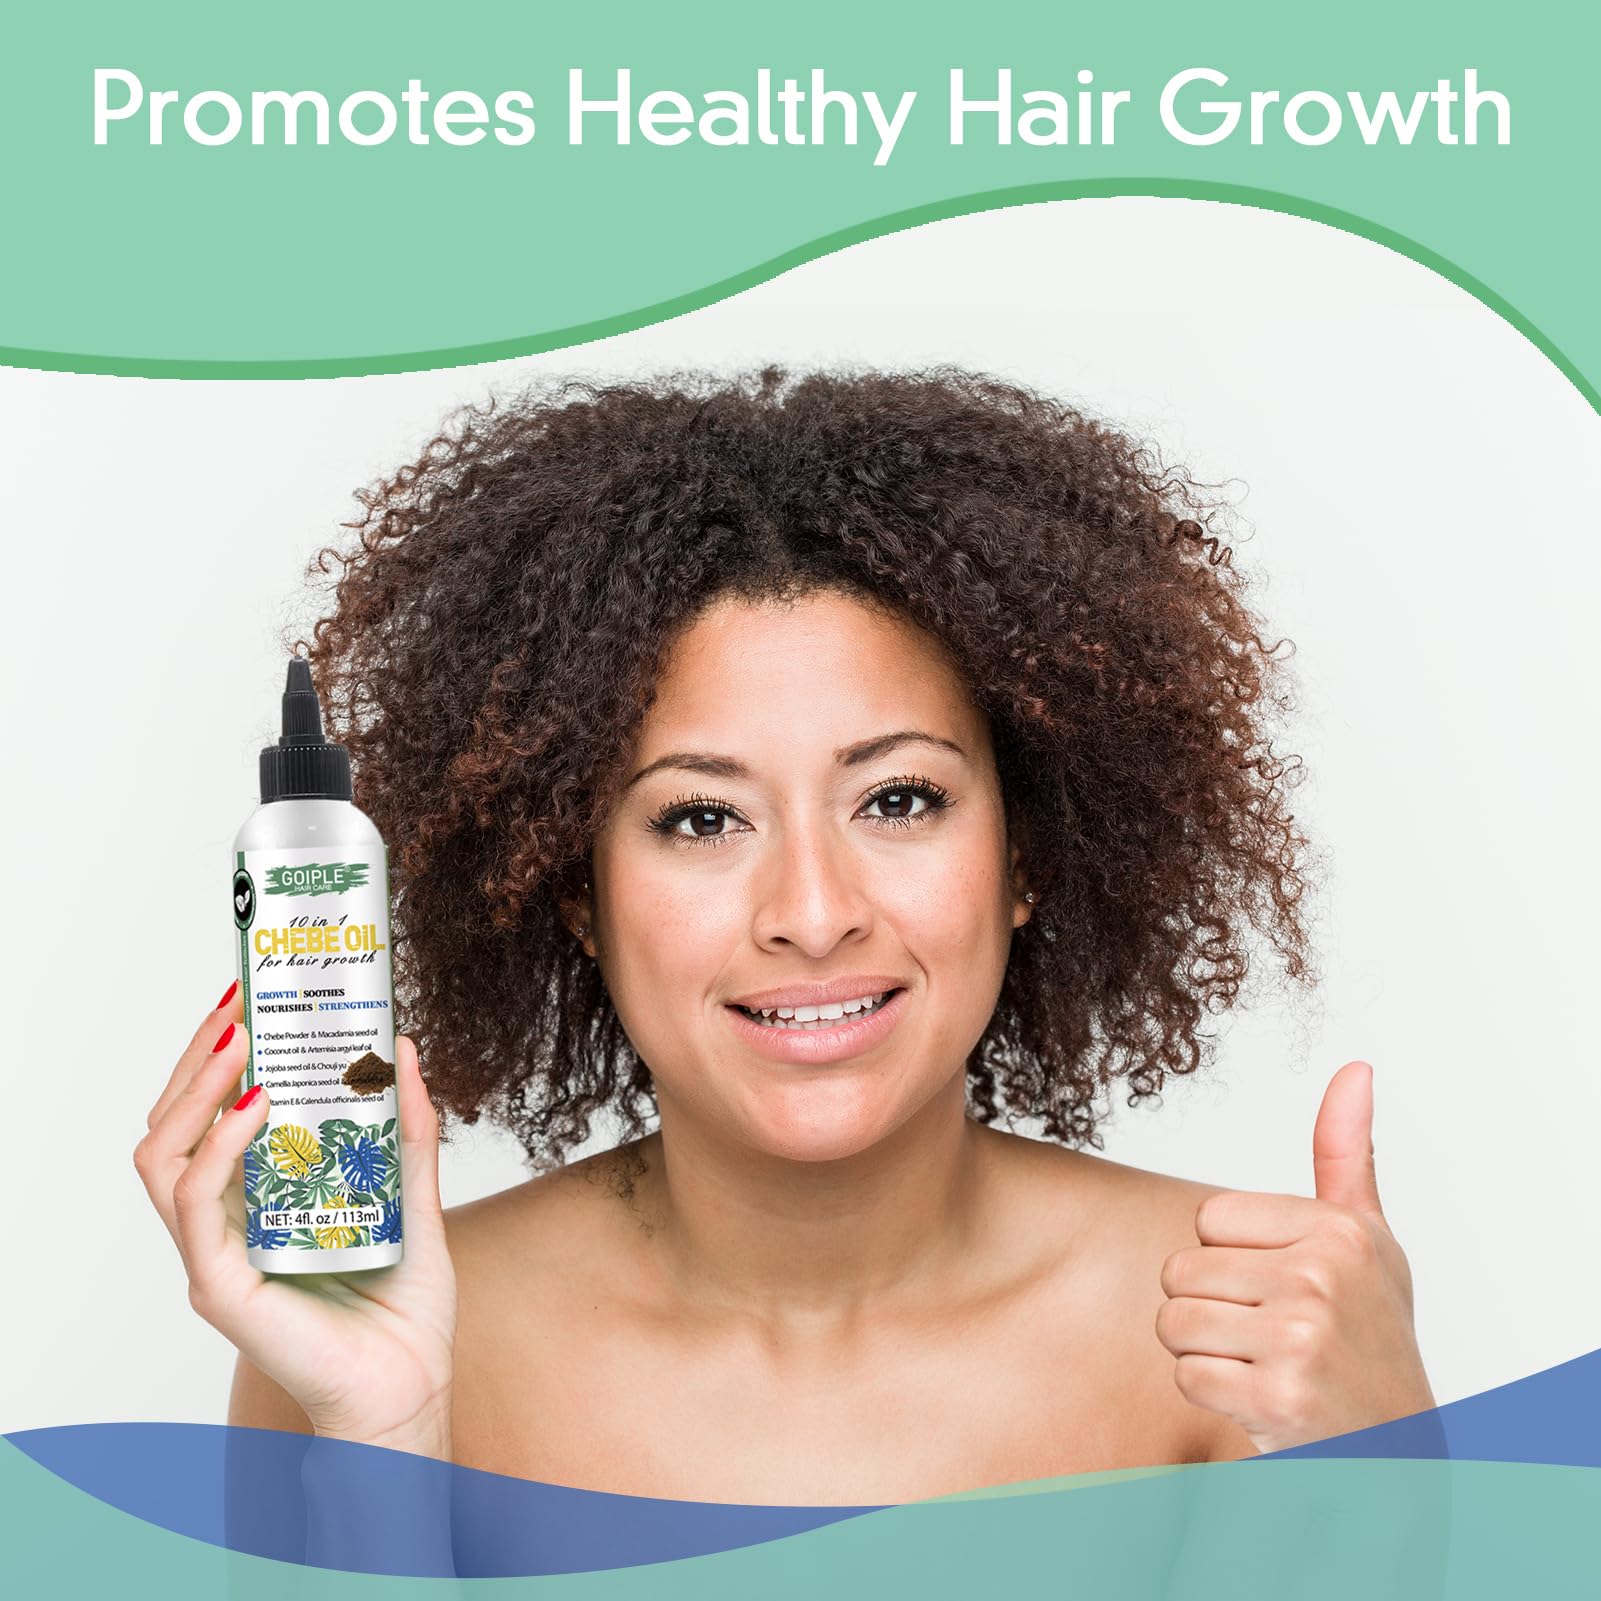 Natural Chebe Hair Oil for Hair Growth